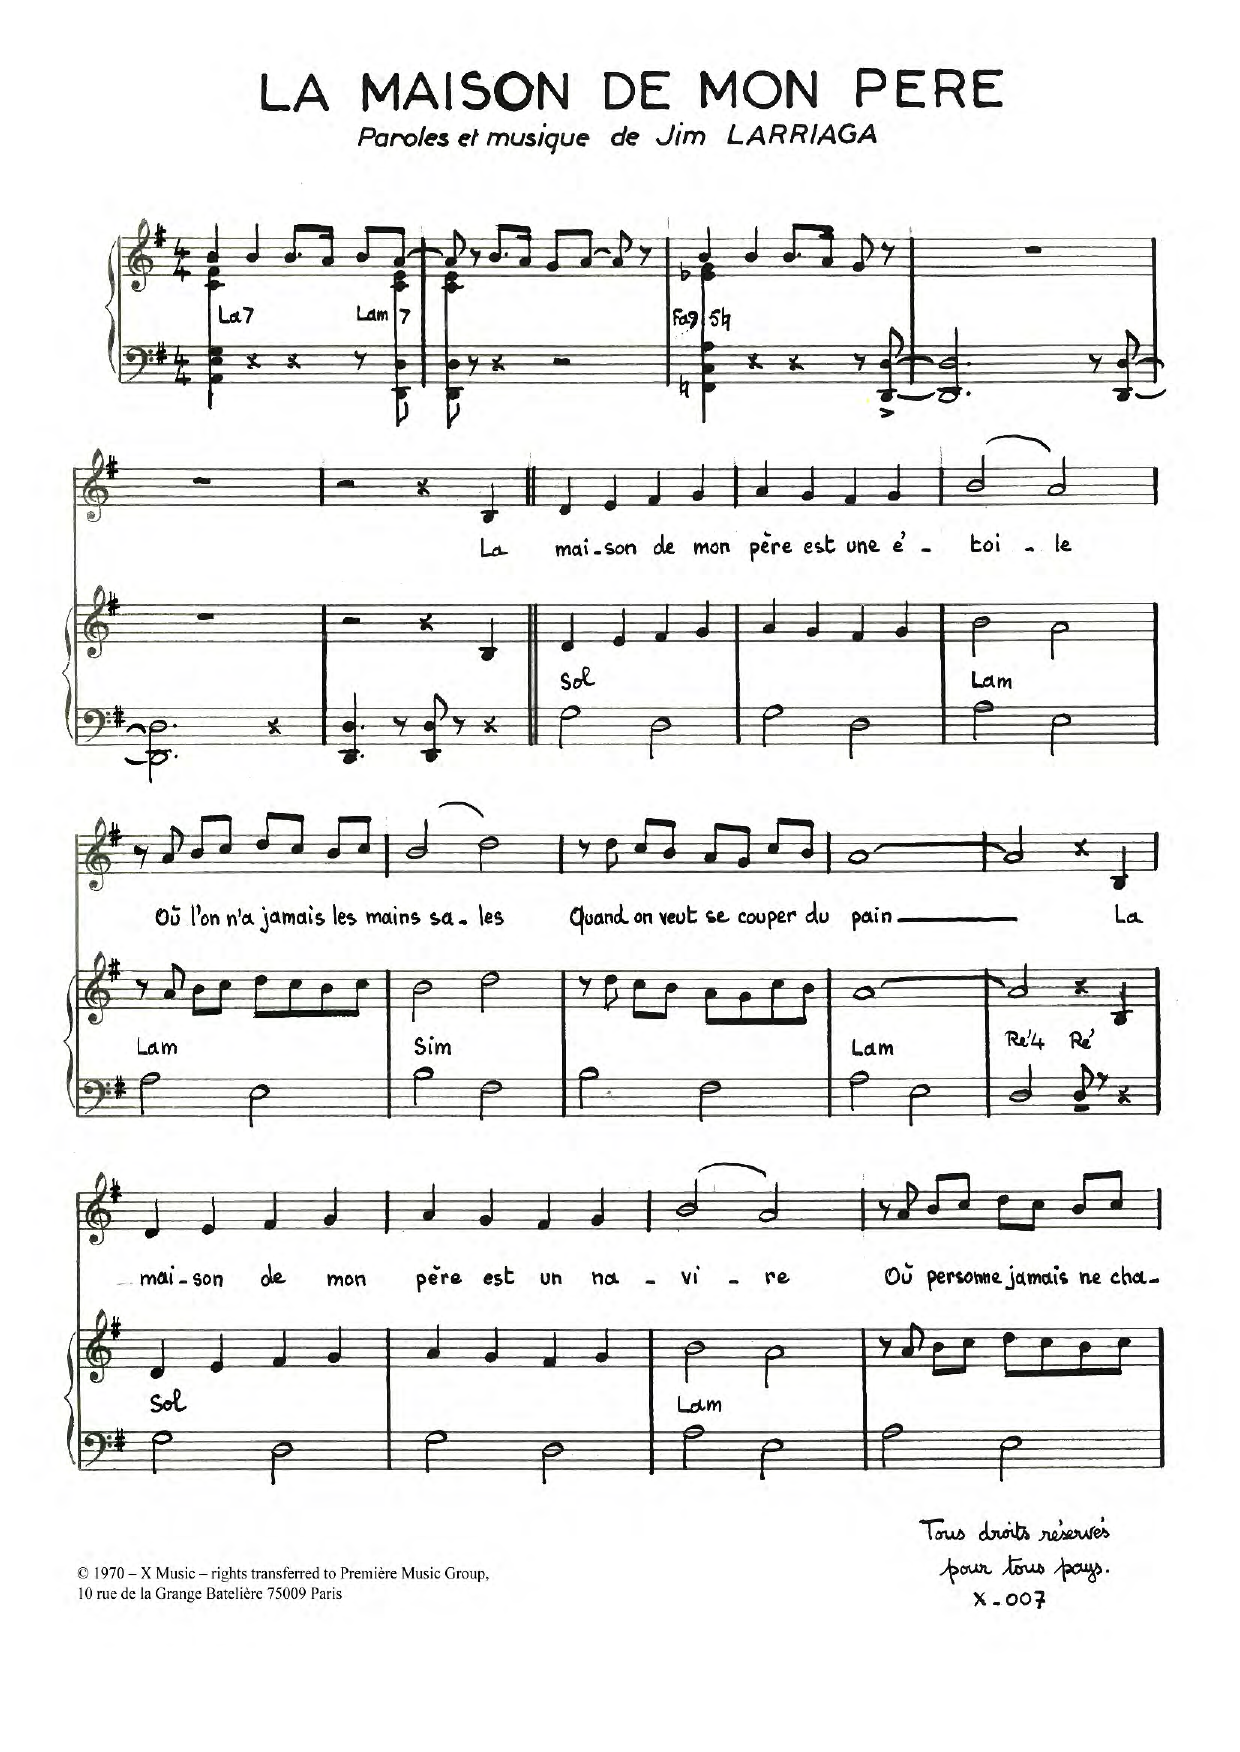 Jim Larriaga La Maison De Mon Pere Sheet Music Notes & Chords for Piano & Vocal - Download or Print PDF